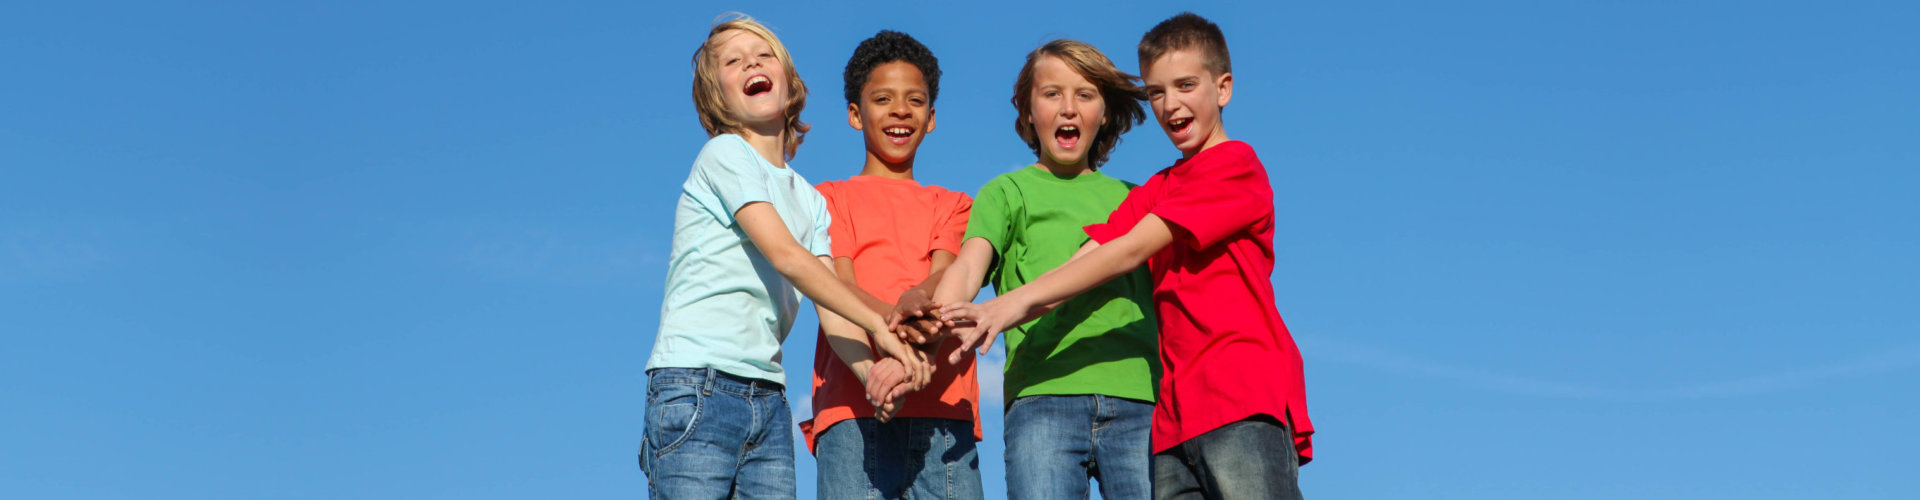 Group of diverse kids or teens hands together